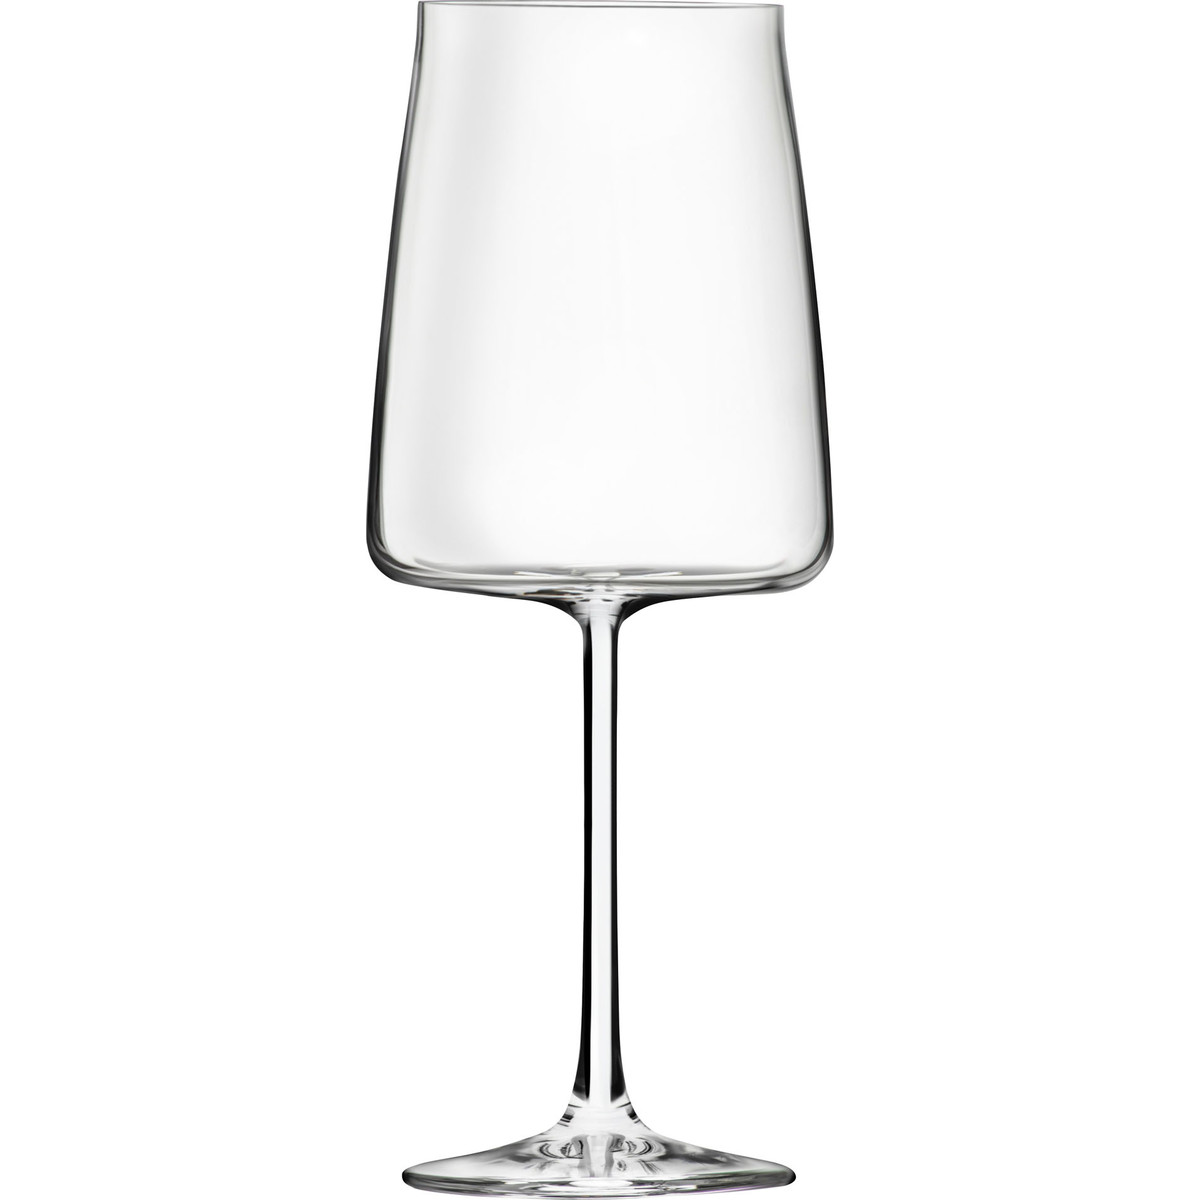 Glasserie "Essential" Rotweinglas 540ml